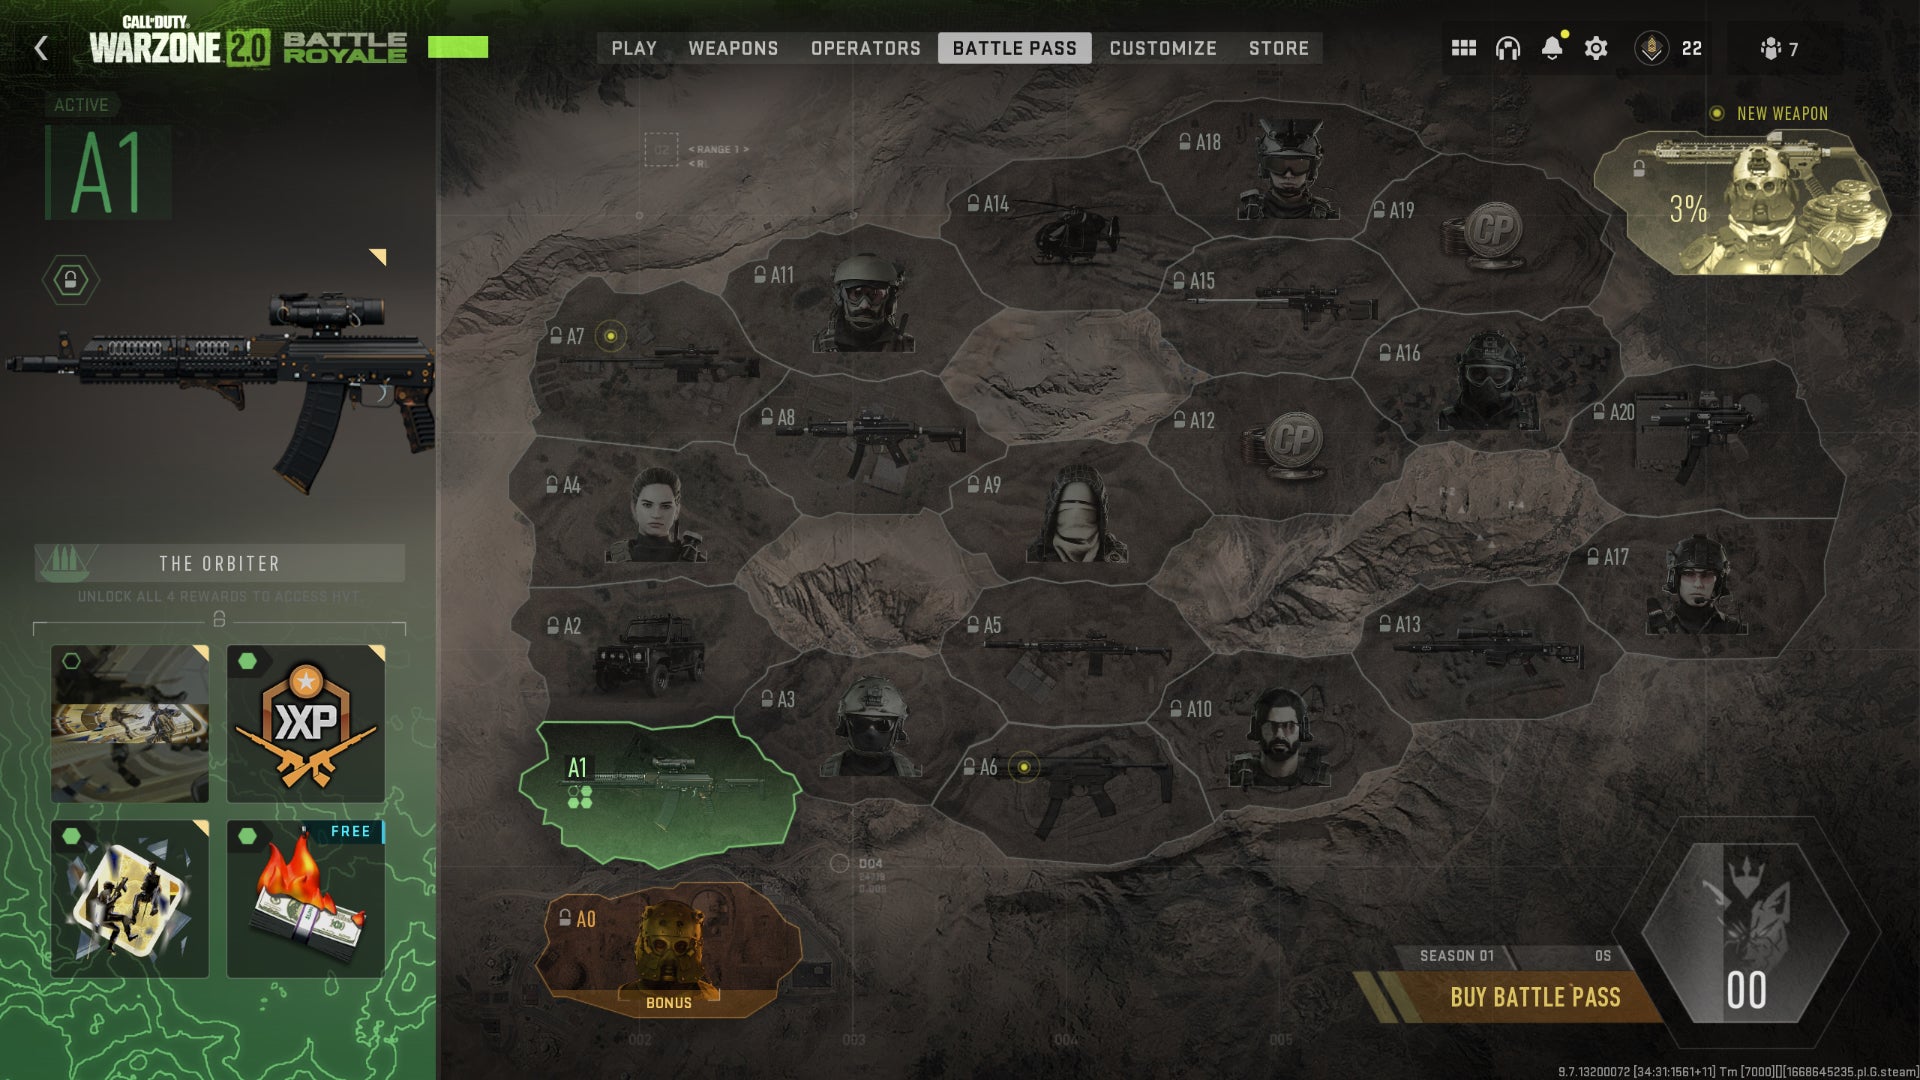 A screenshot of the Warzone 2 Battle Pass map.